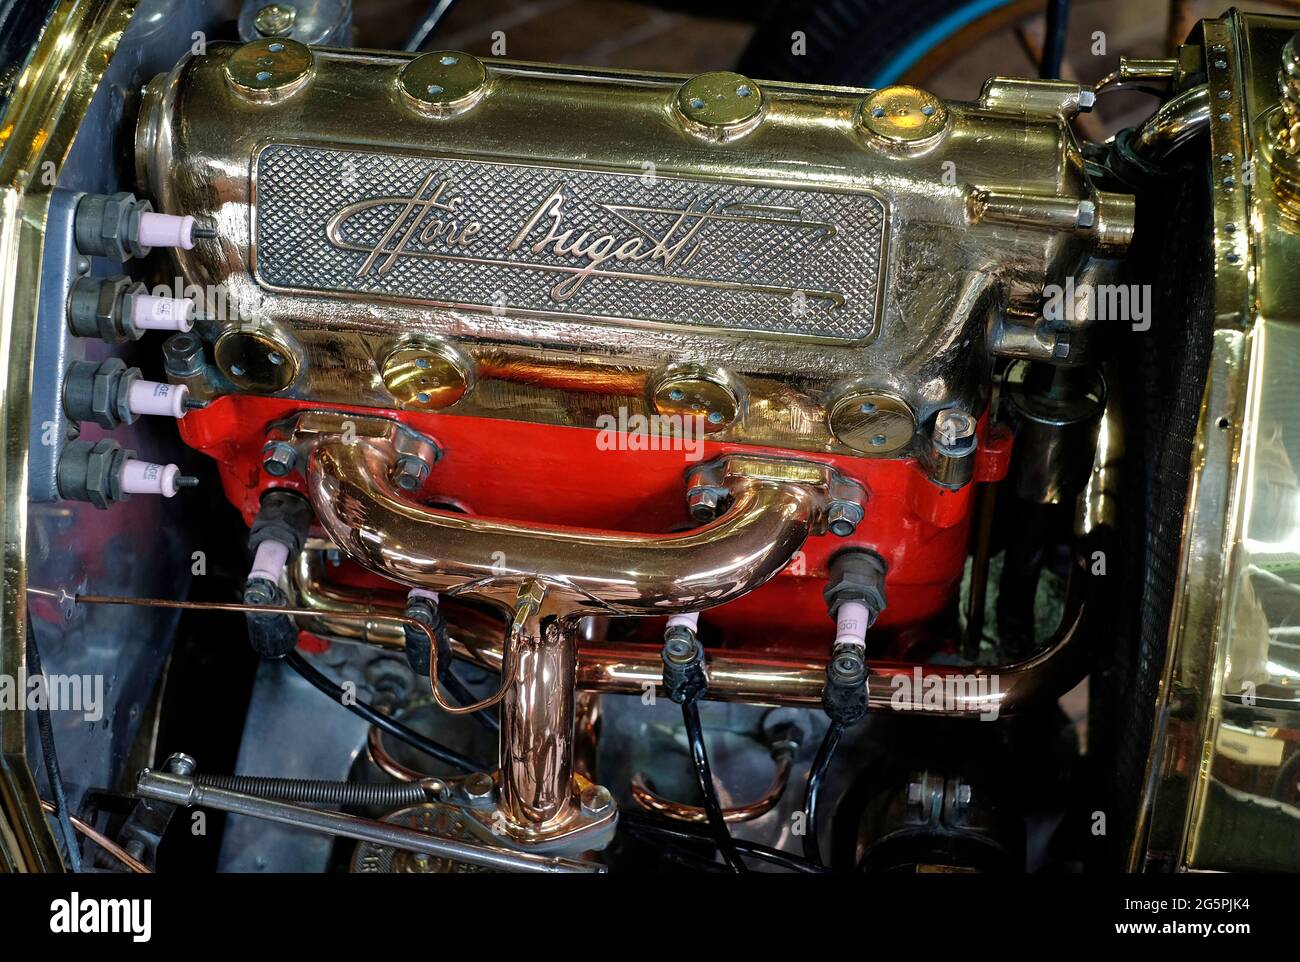 bugatti type 15 motor vehicle engine Stock Photo